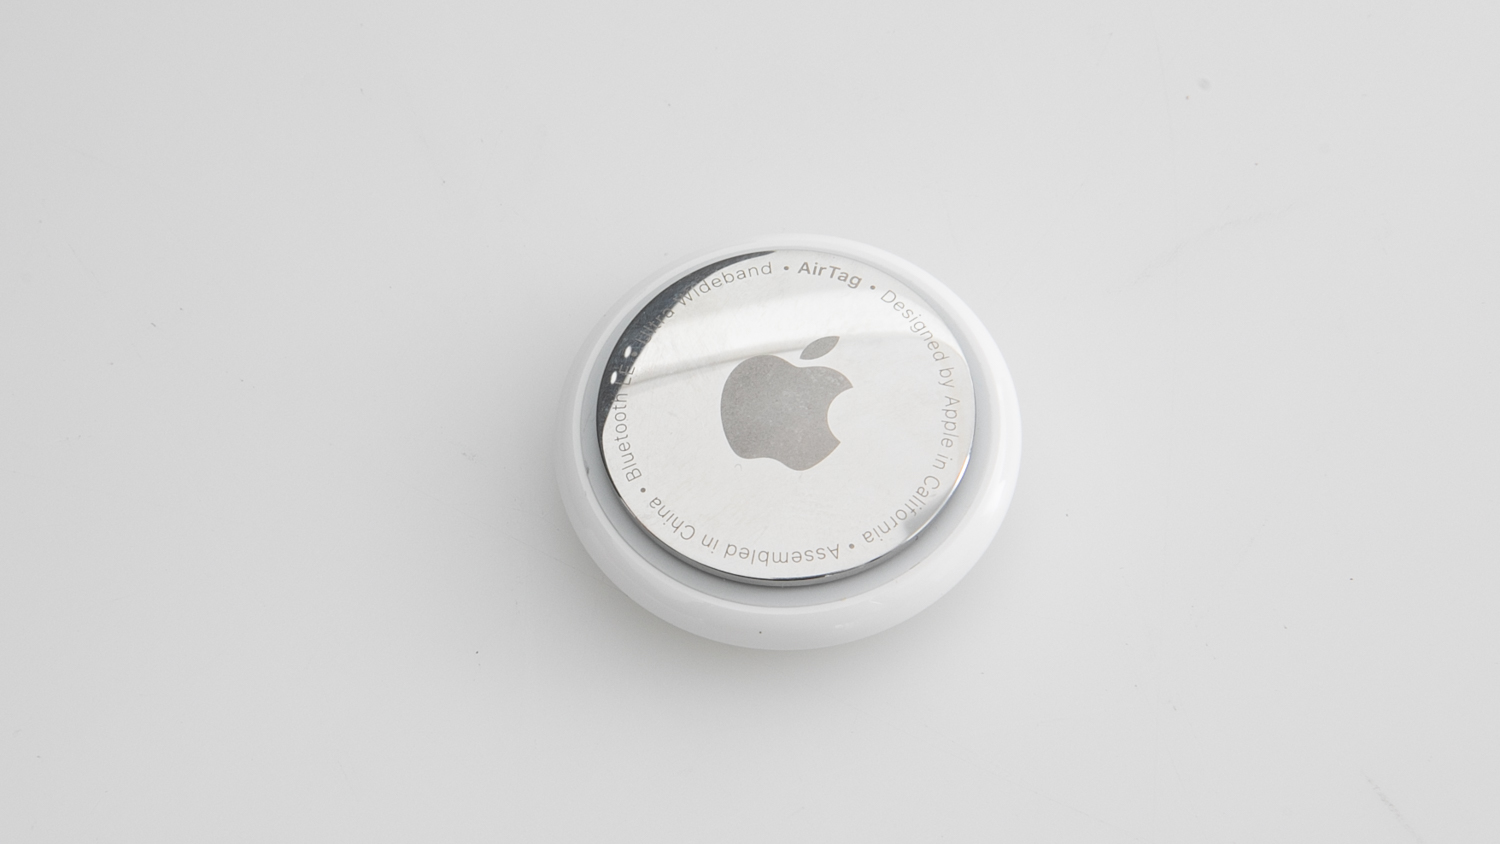 Apple Air Tag Bluetooth Tracker - Google Apple